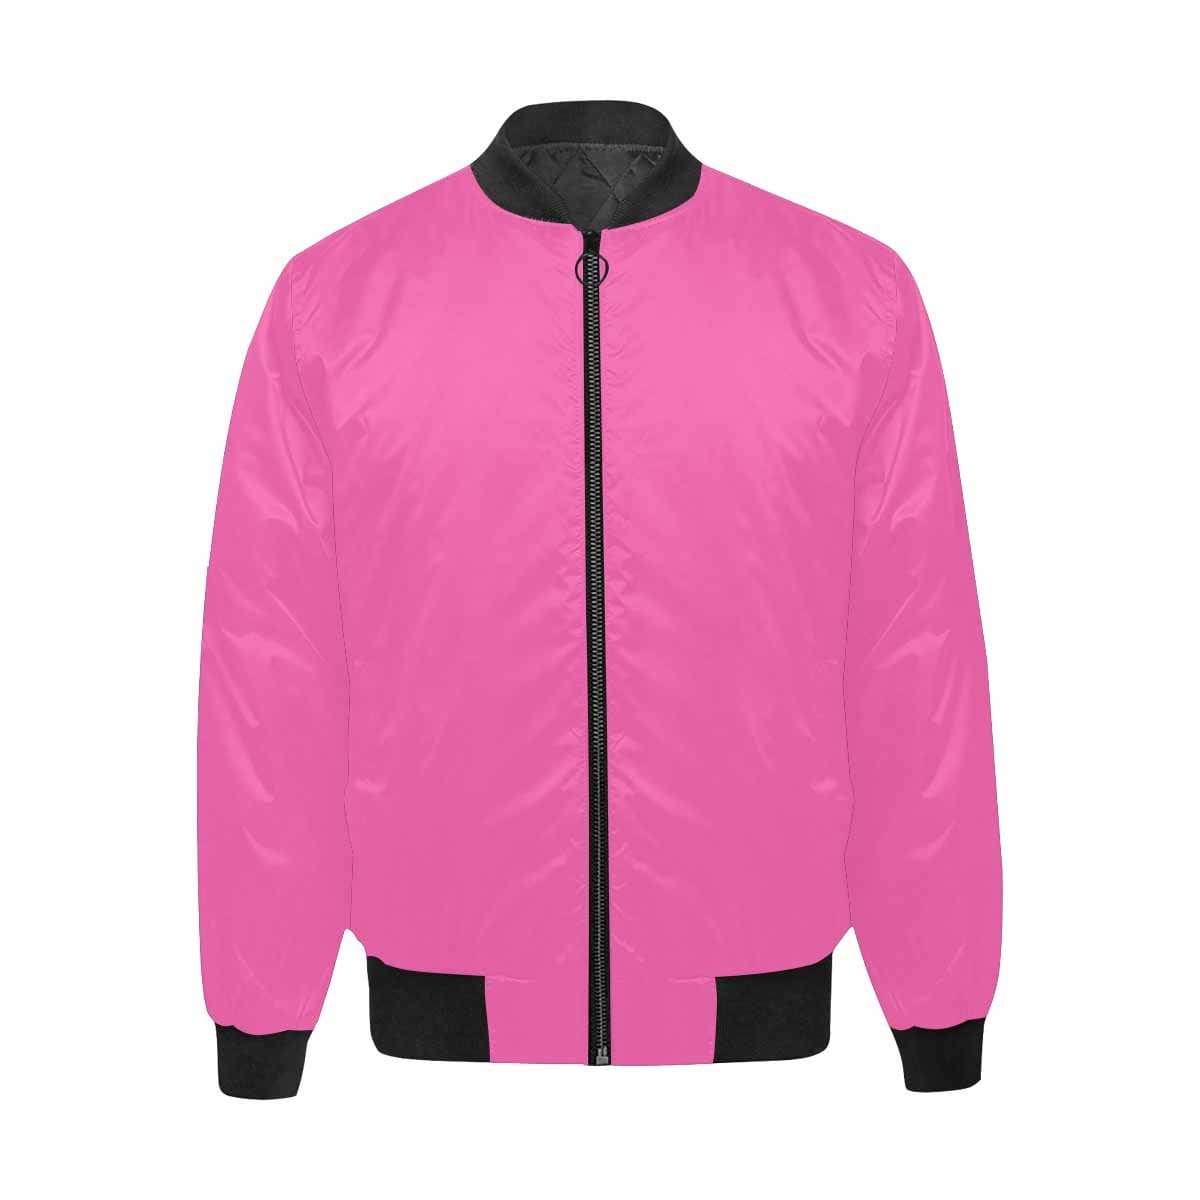 Mens Jacket Hot Pink And Black Bomber Jacket - Mens | Jackets | Bombers